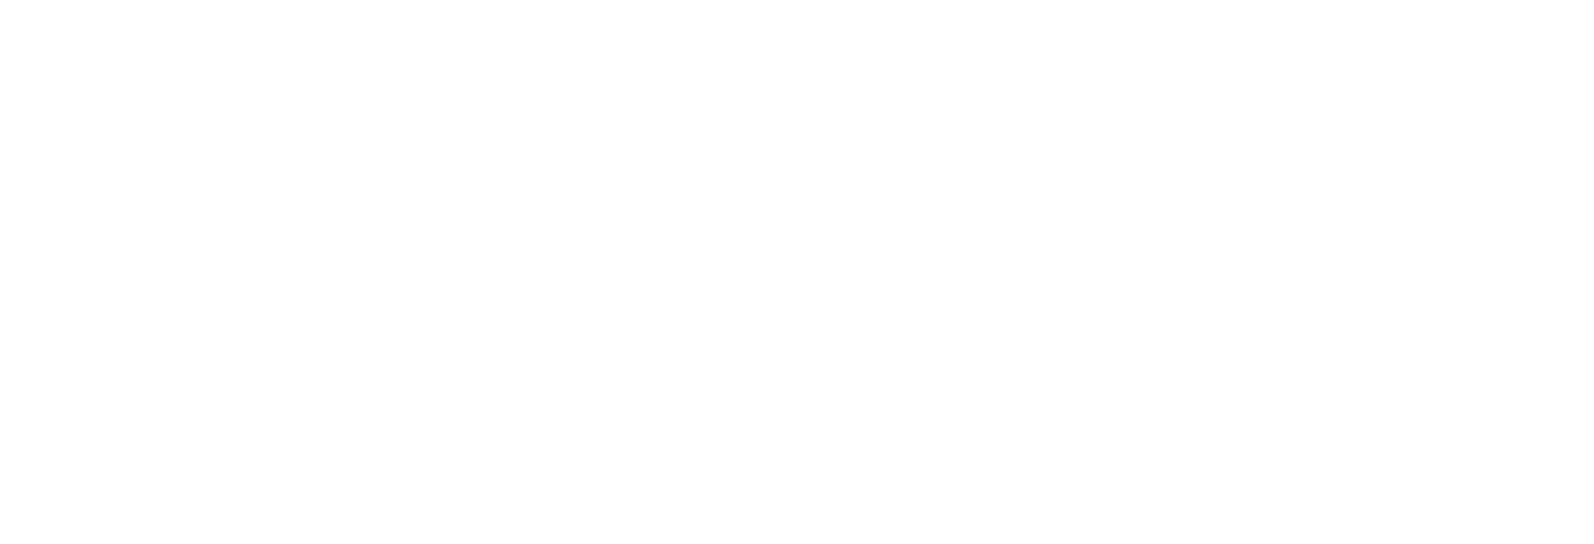 ContextLogic (wish.com) logo large for dark backgrounds (transparent PNG)